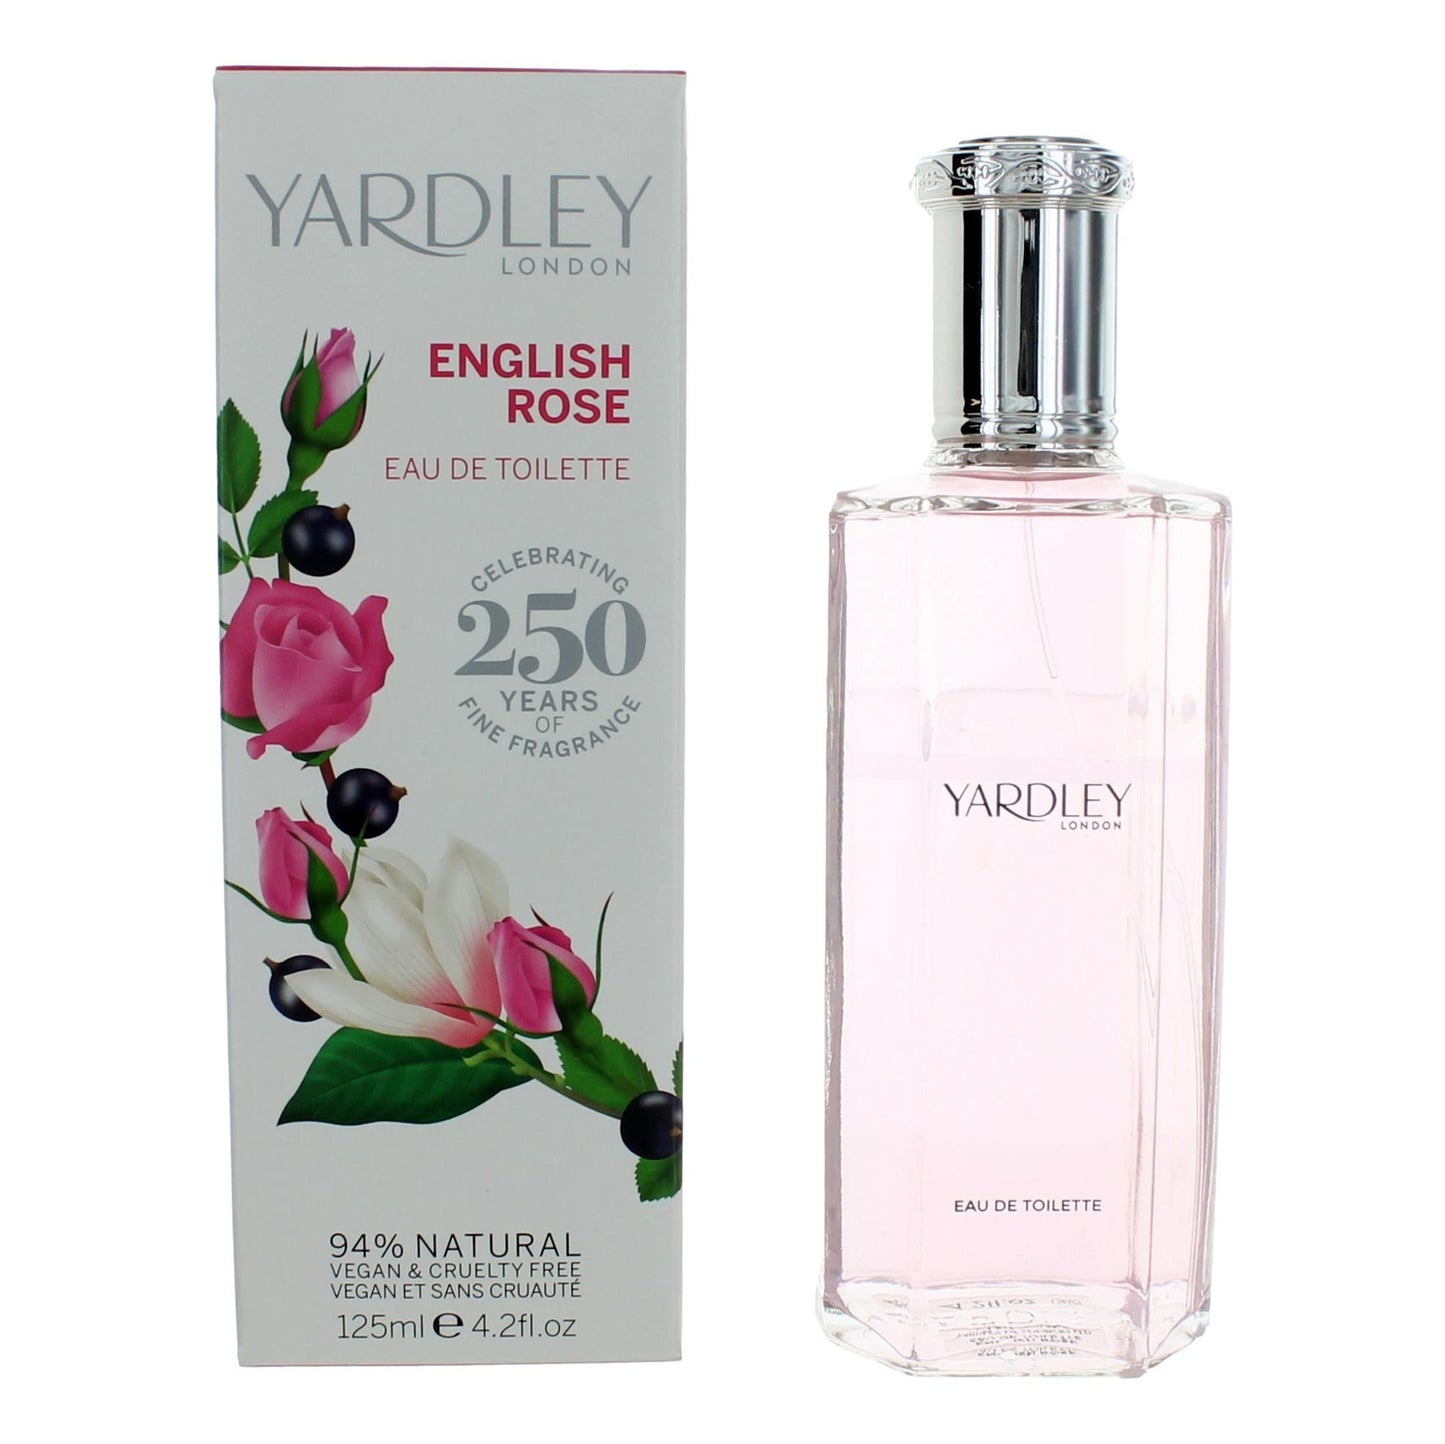 Yardley English Rose by Yardley of London